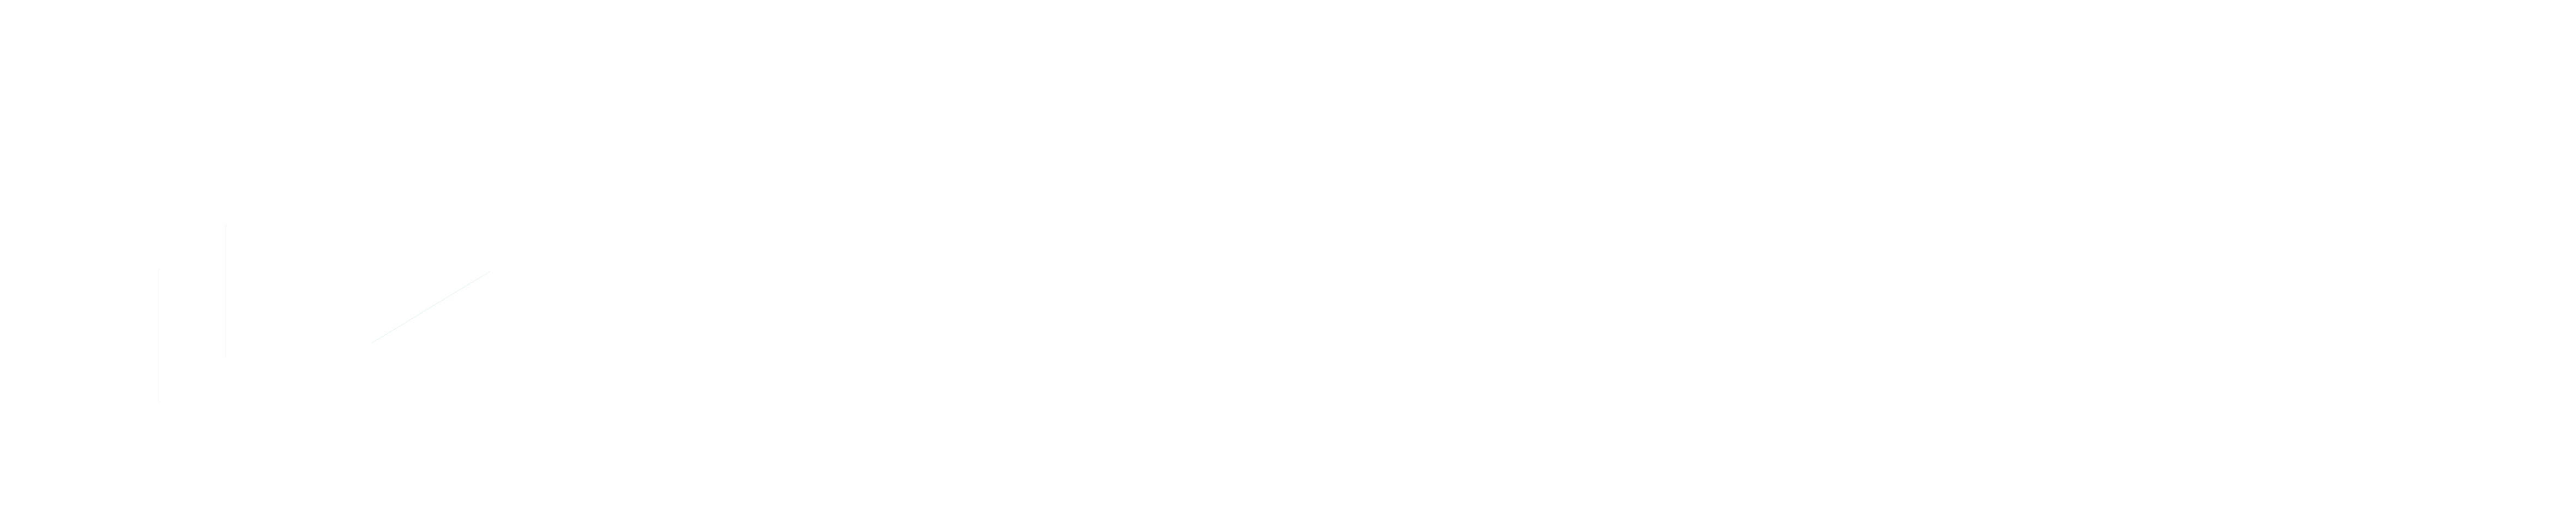 NewCrafts logo